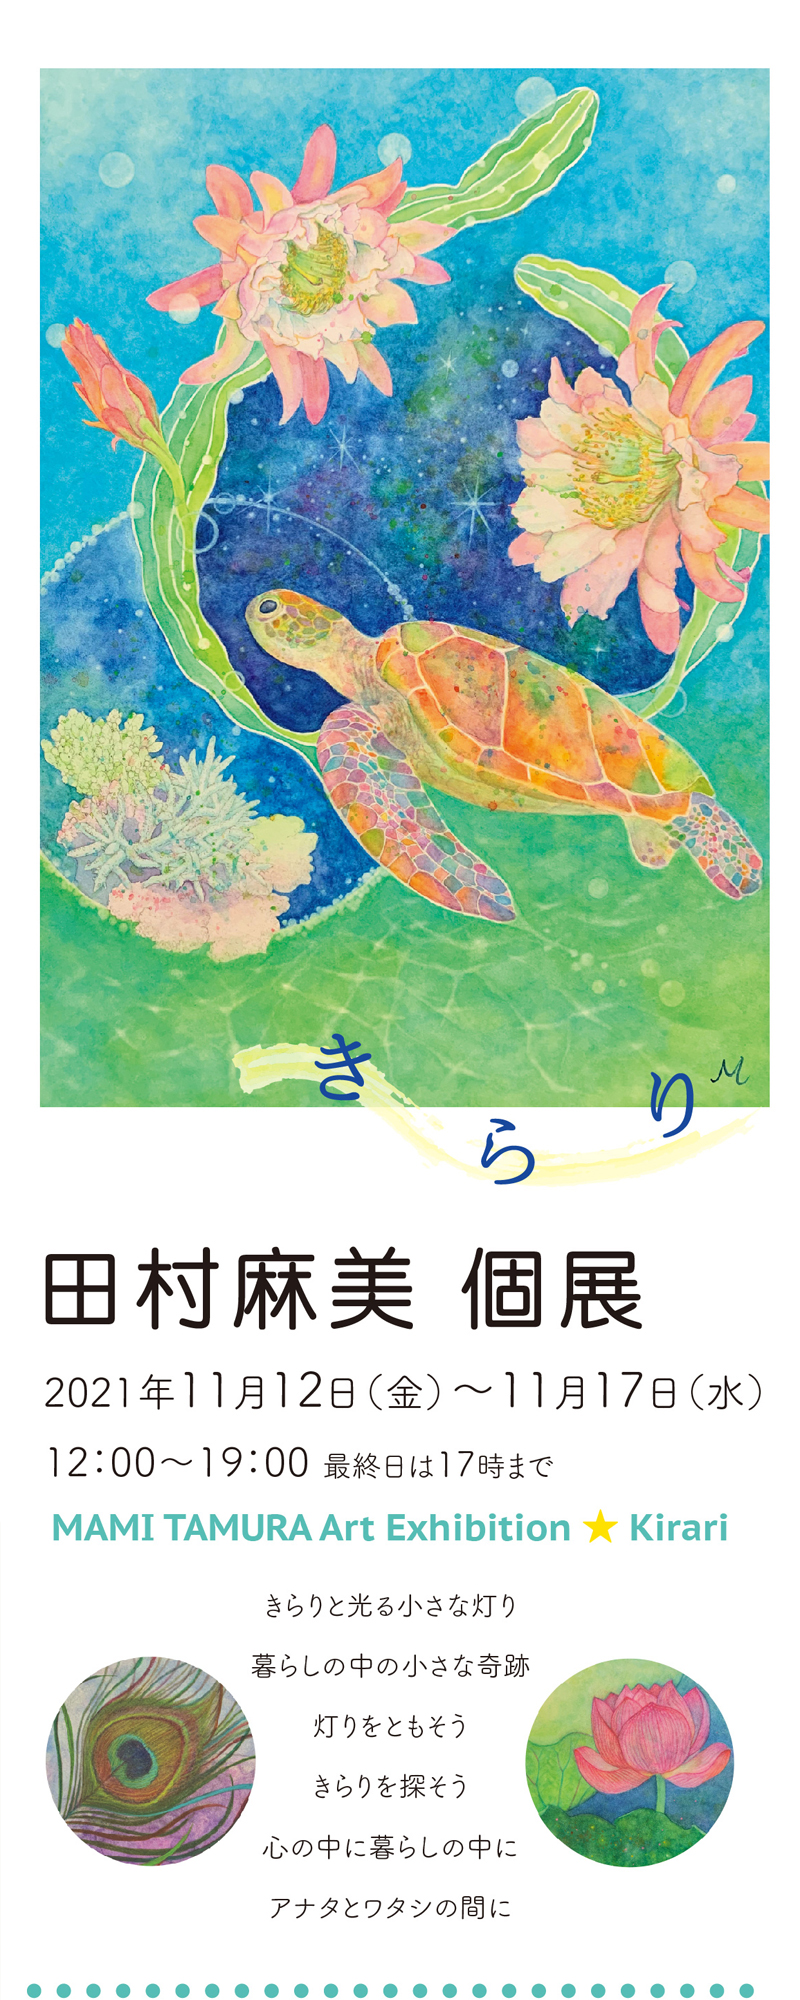 Mami Tamura Art exhibition KIRARI